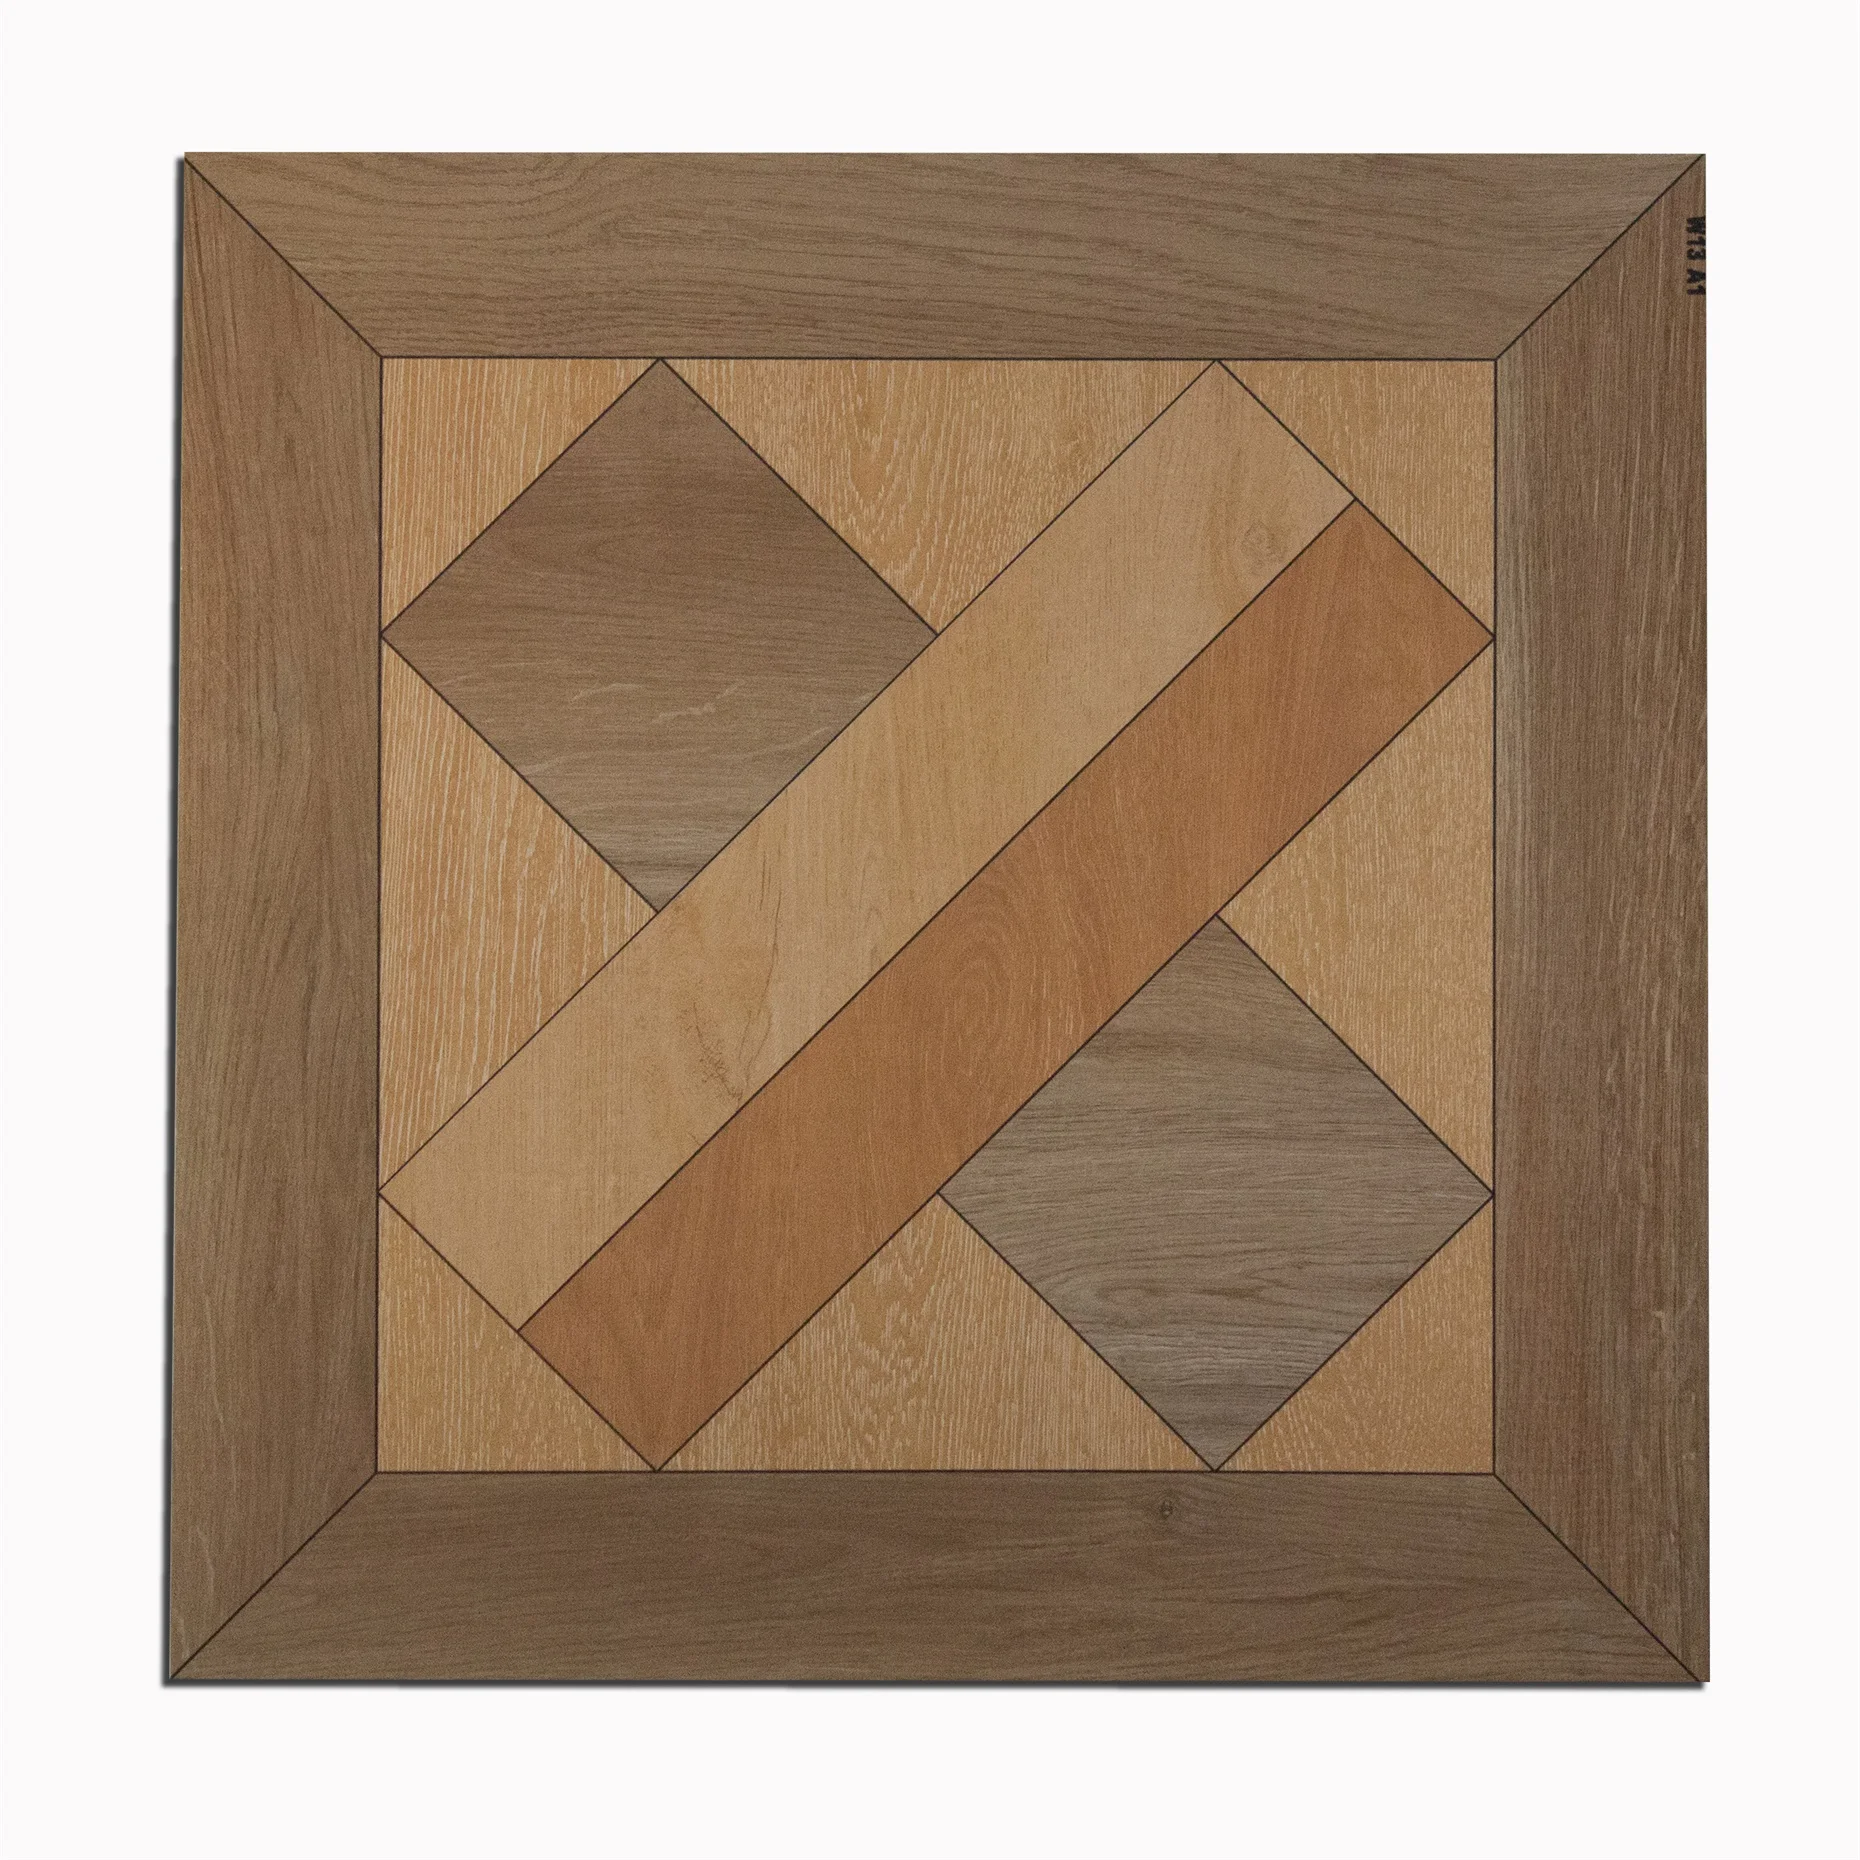 Wooden Design For Living Room Ceramic wood Tiles